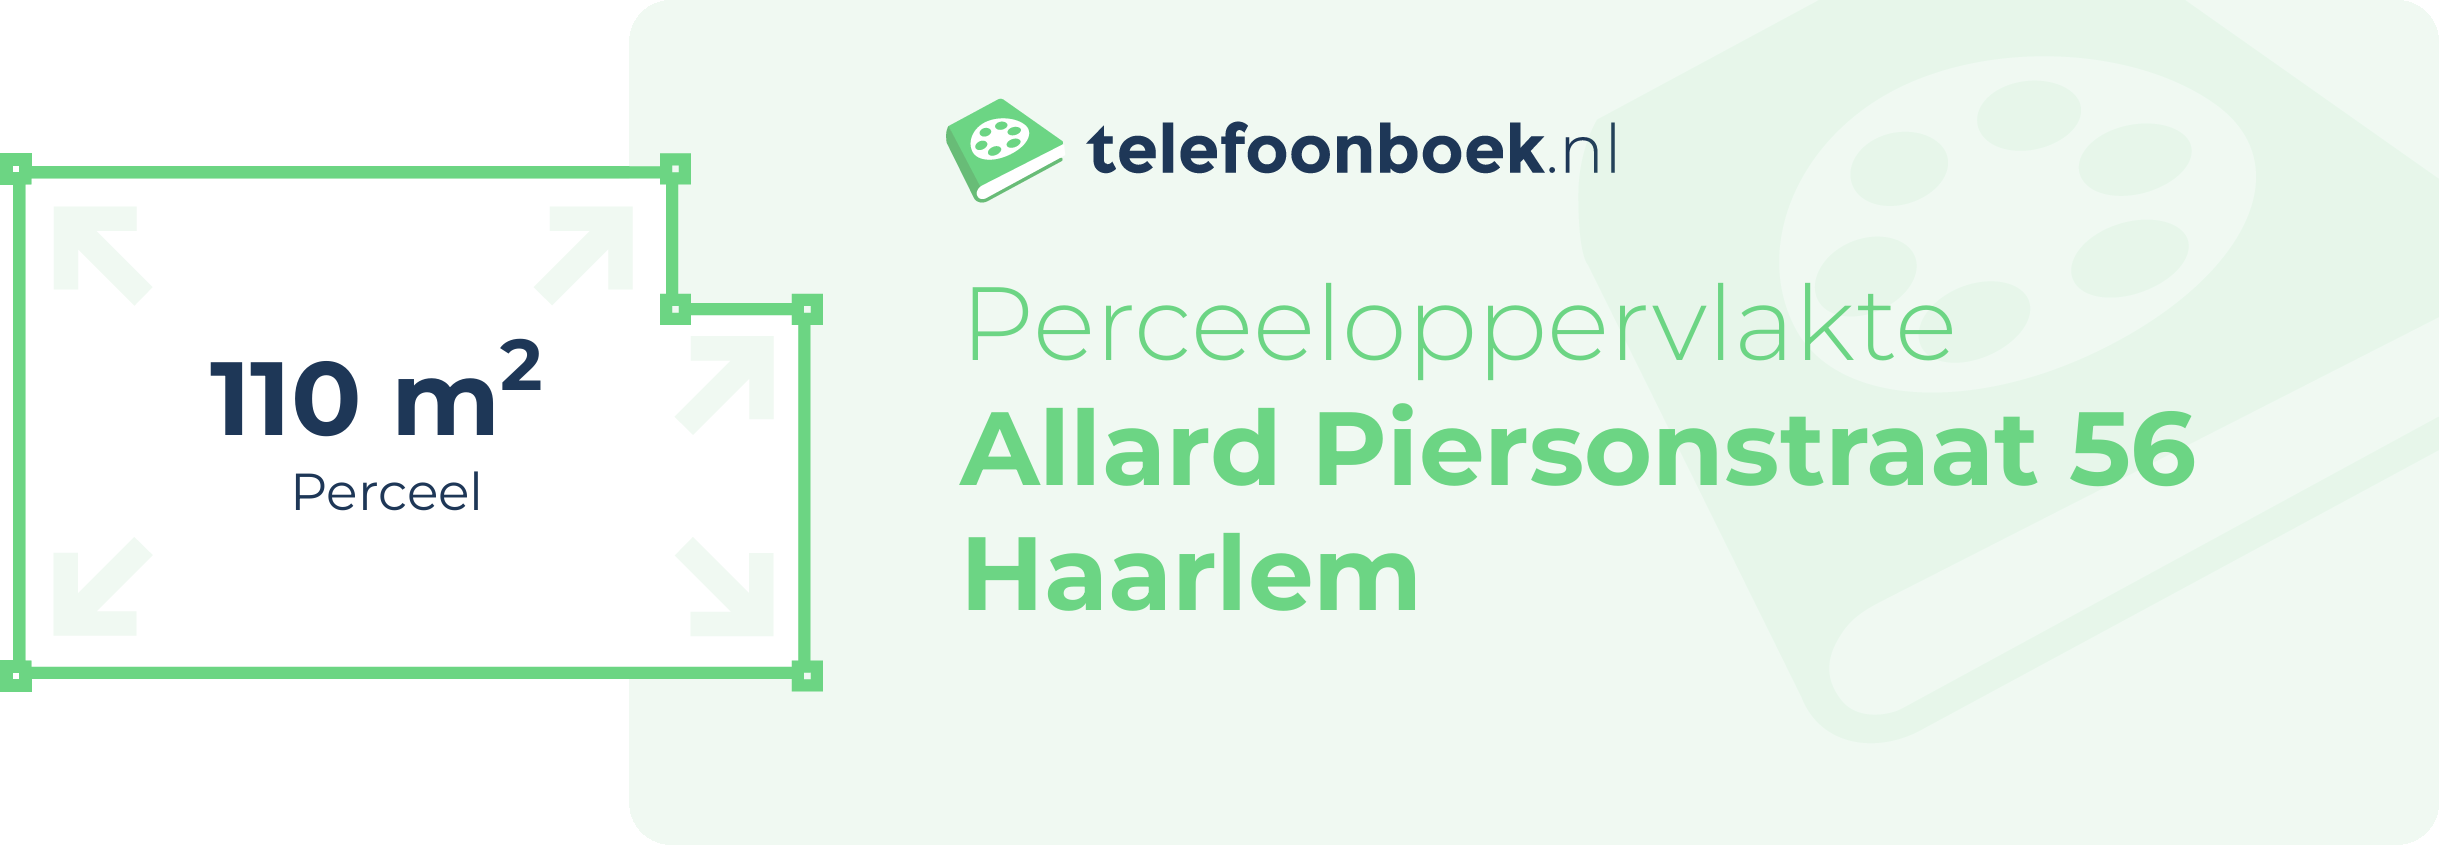 Perceeloppervlakte Allard Piersonstraat 56 Haarlem